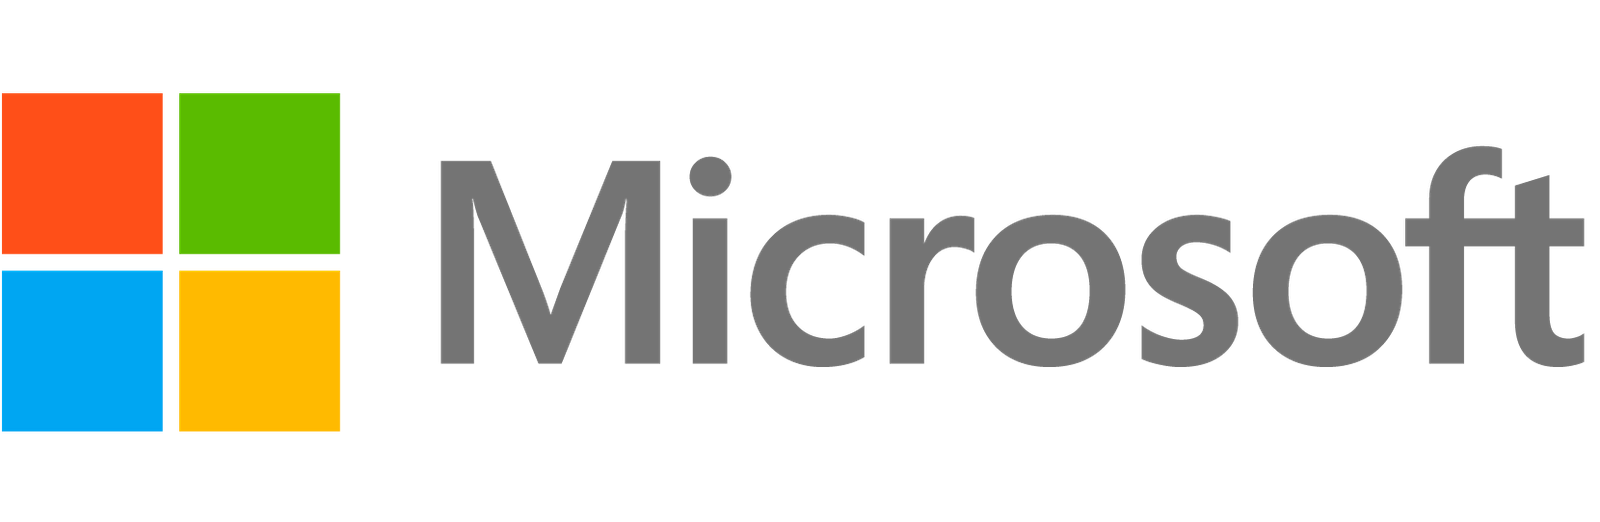 microsoft-logo-microsoft-symbol-meaning-history-png-14